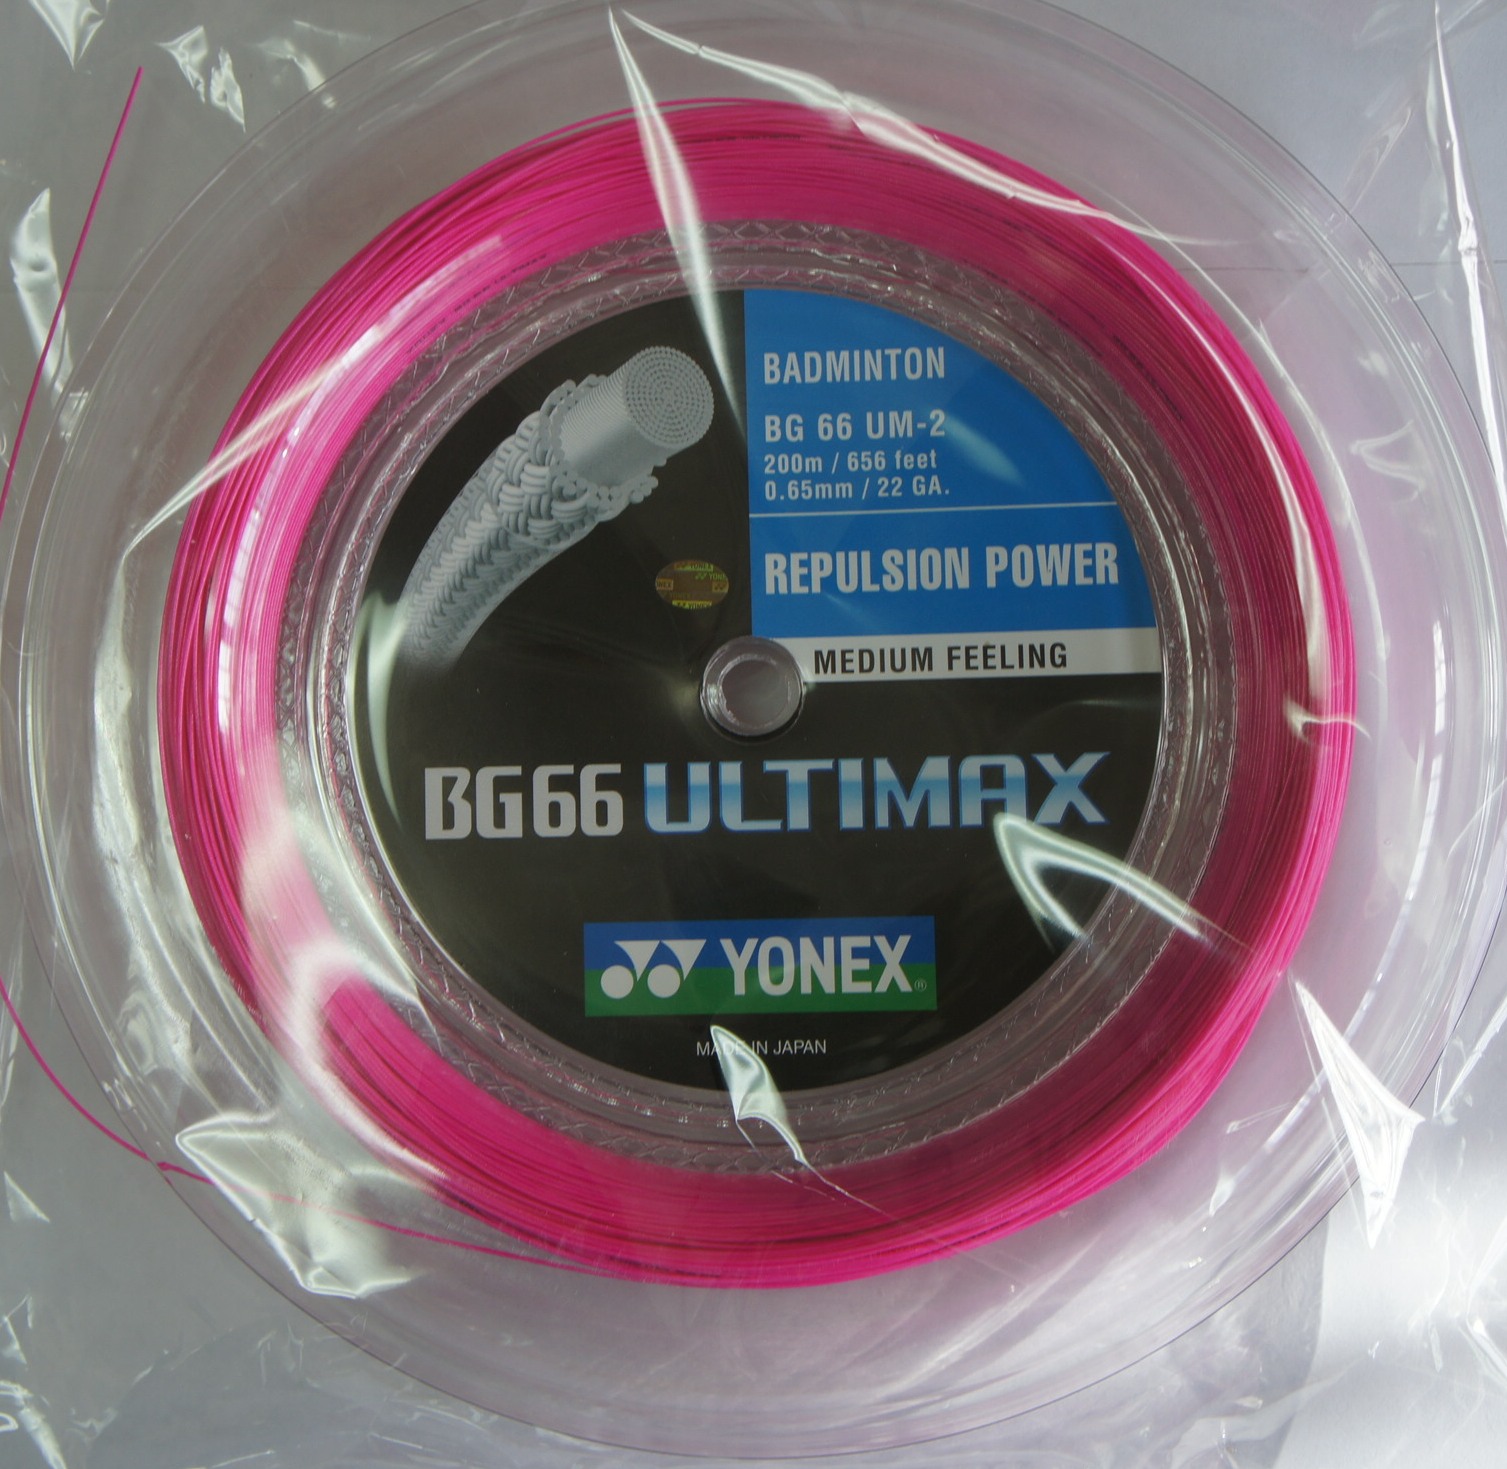 YONEX BG66 ULTIMAX 200M COIL BADMINTON STRING NEON PINK COLOUR .65mm